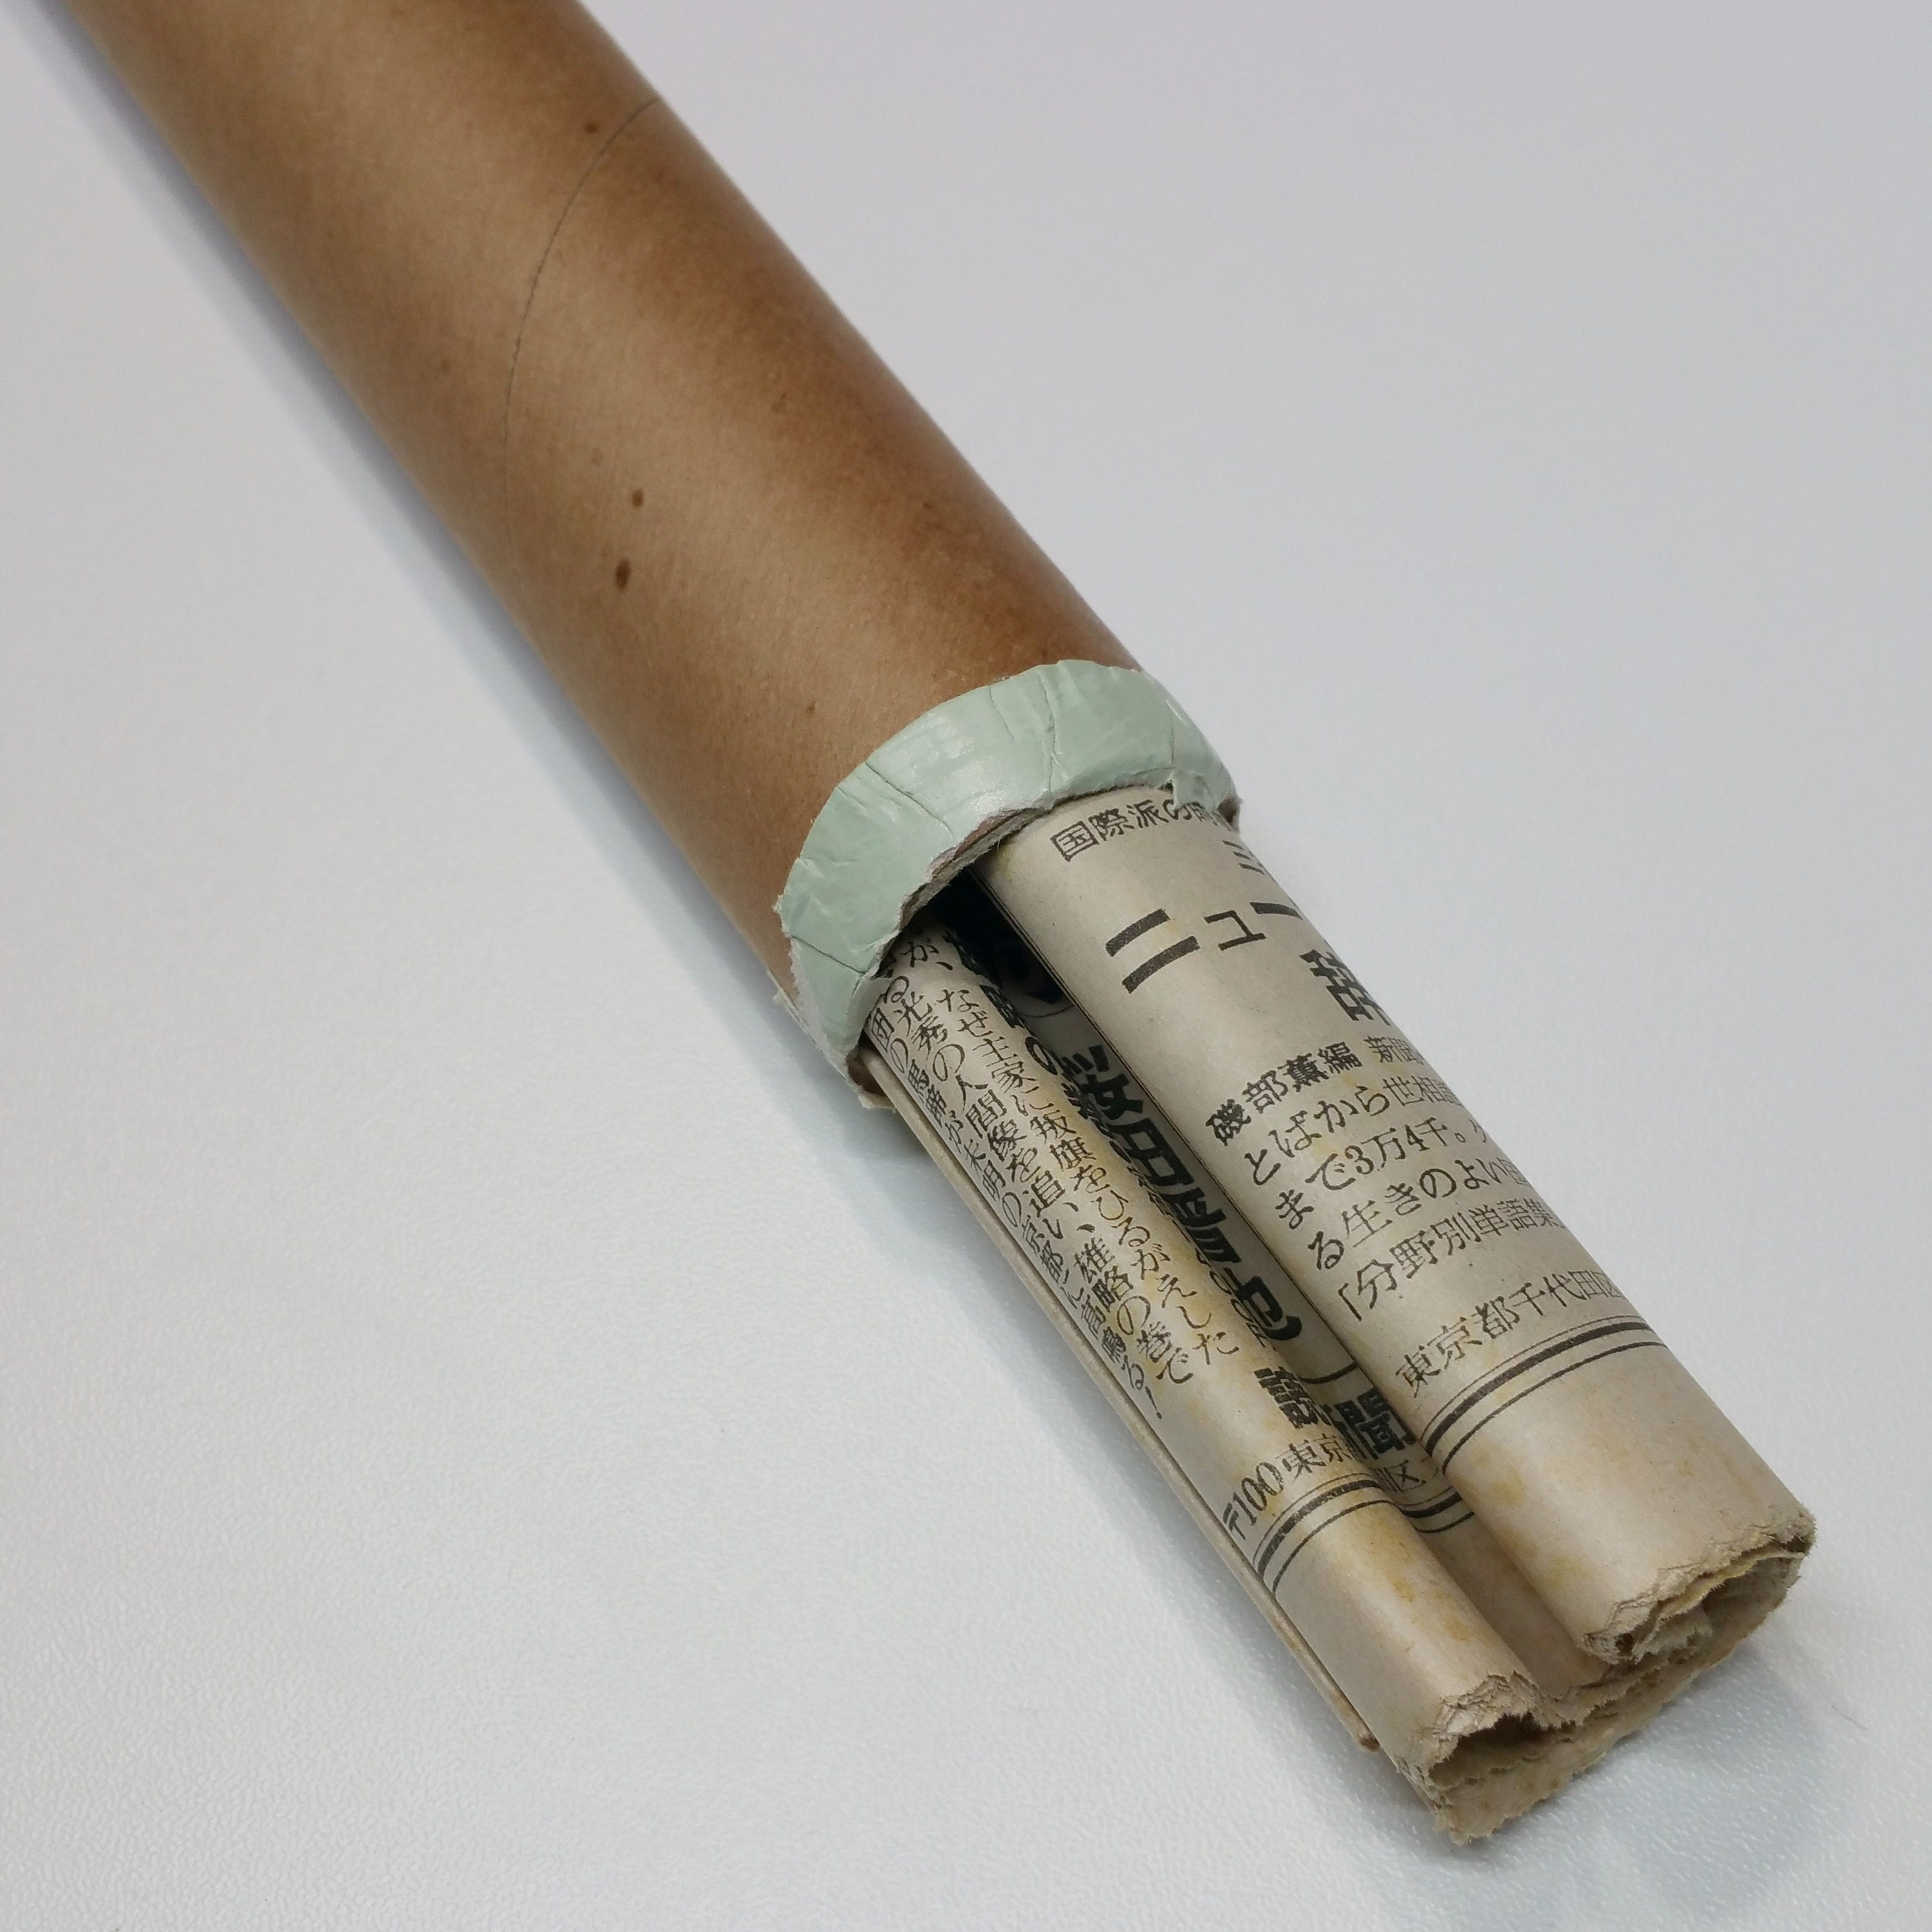 newspaper hidden inside tanmono tube